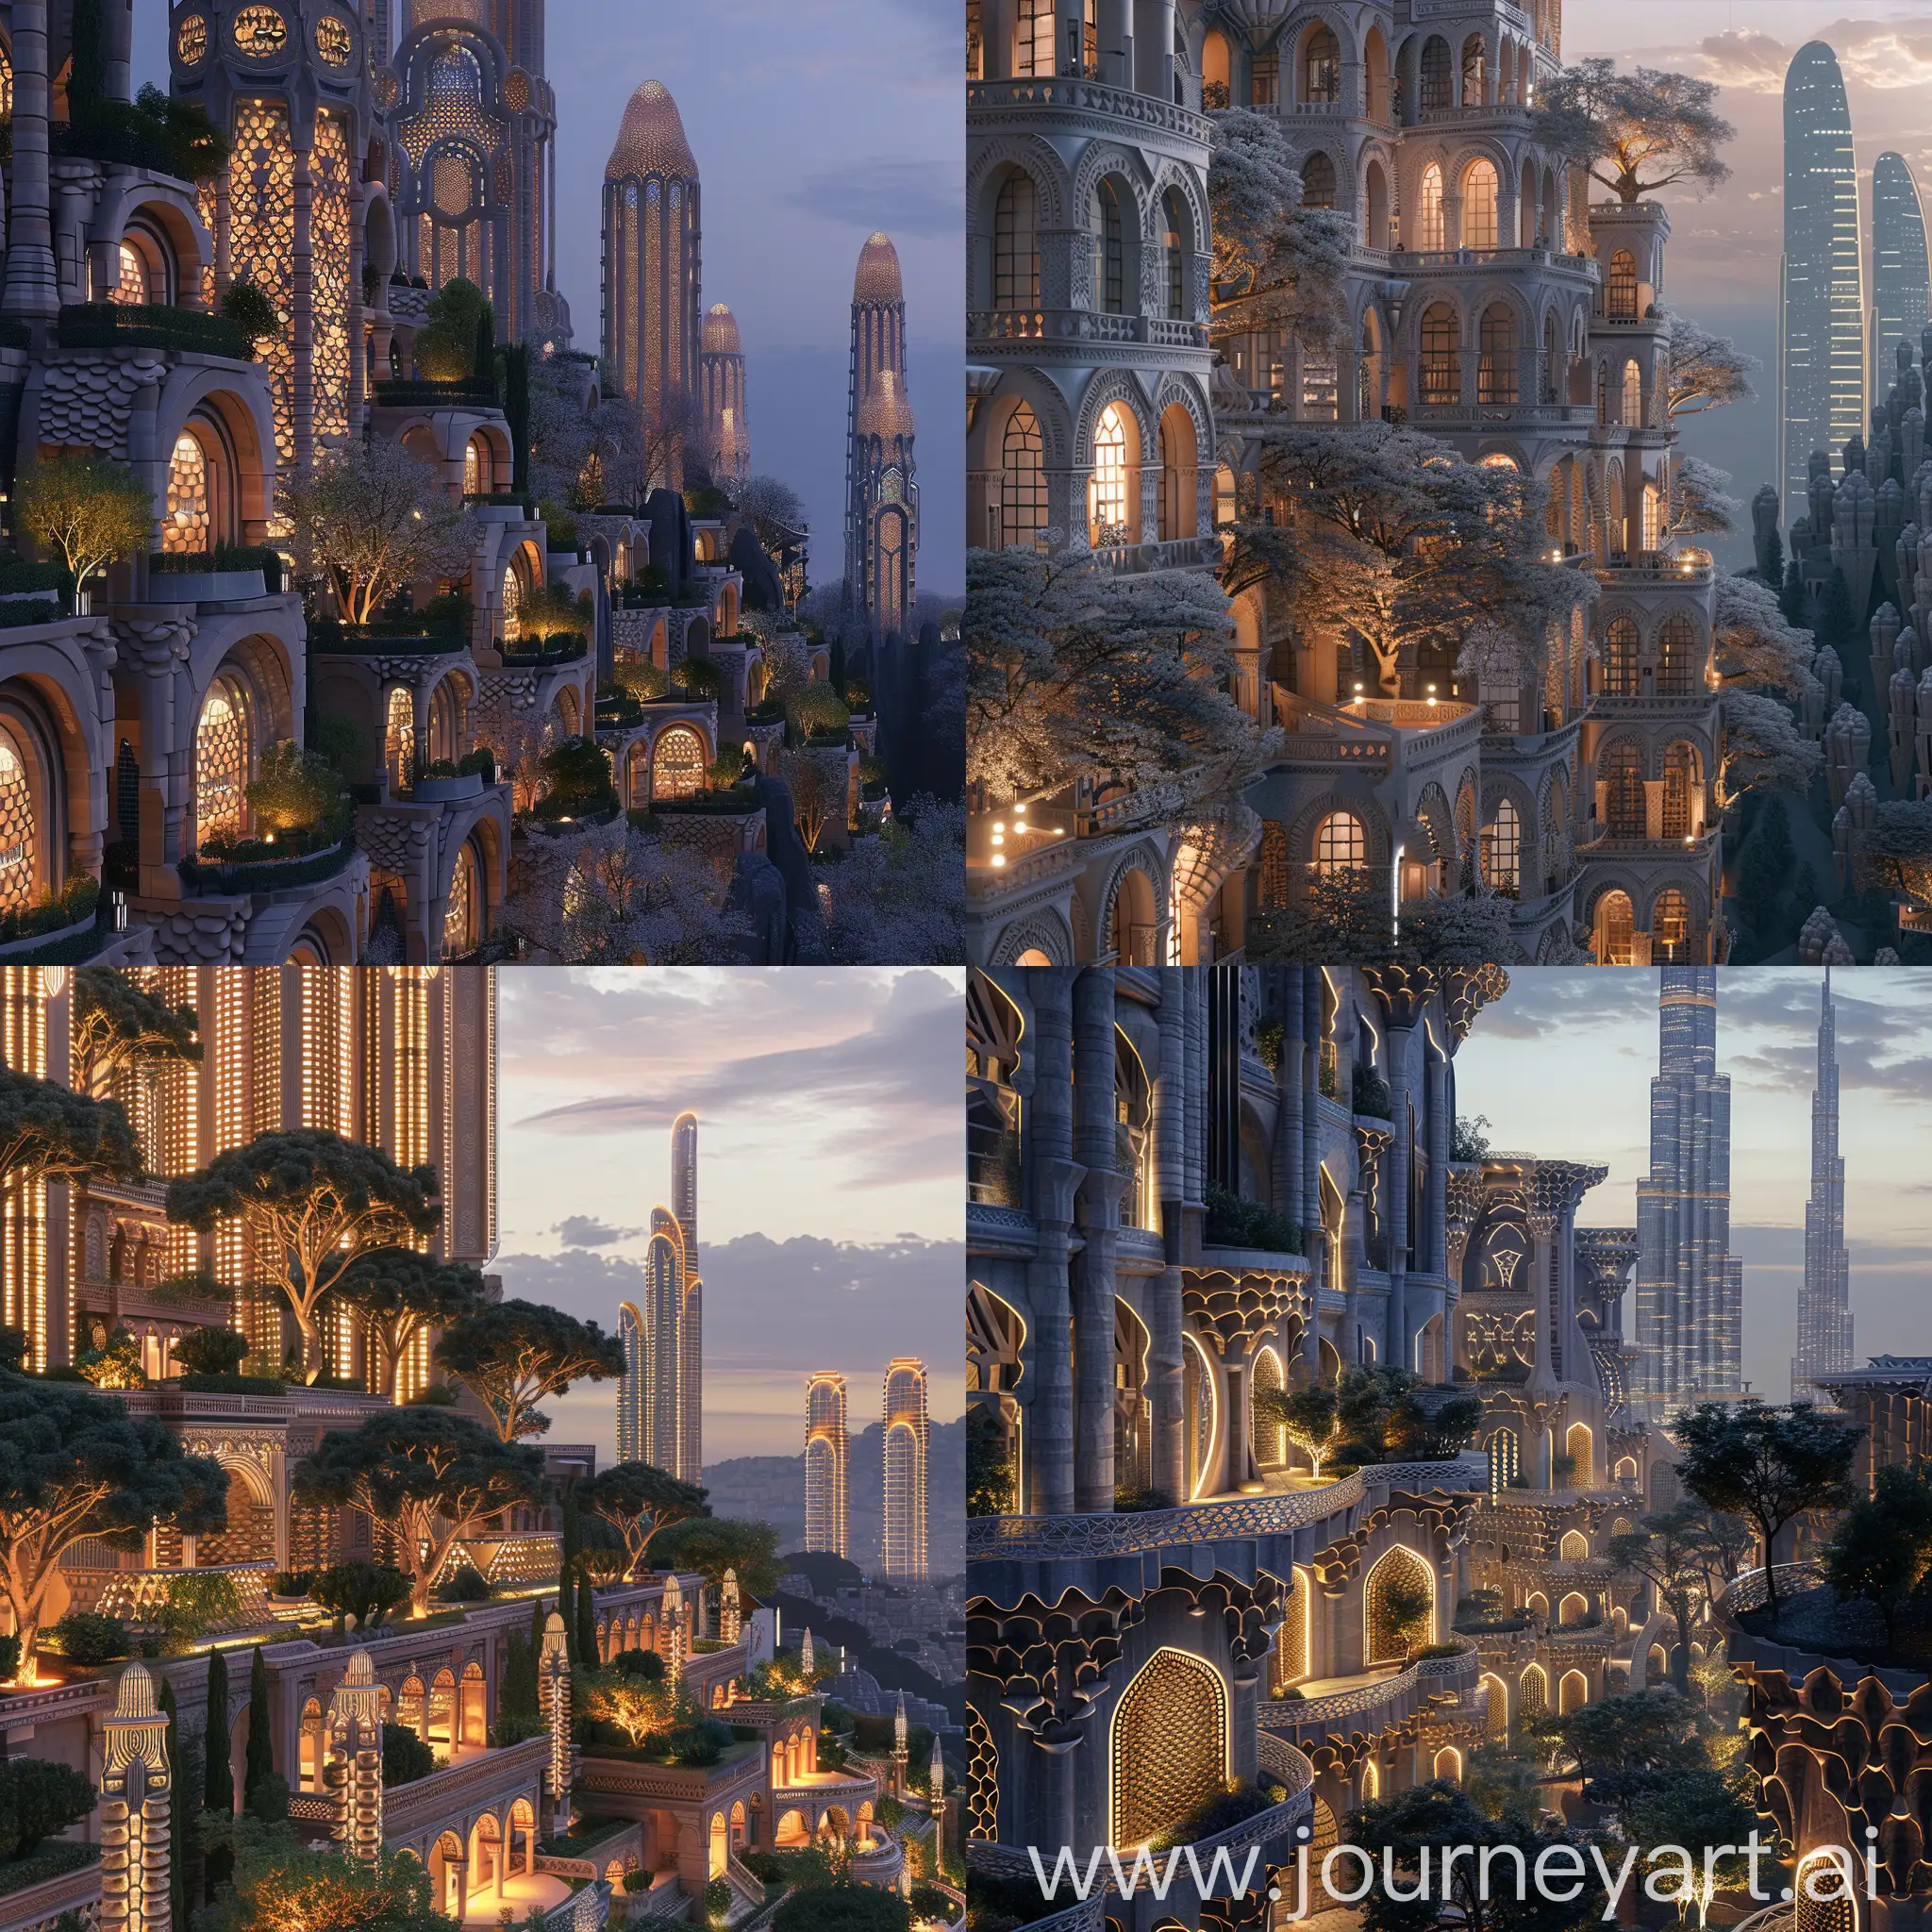 Ornate-ScalePatterned-Metropolis-with-Illuminated-Trees